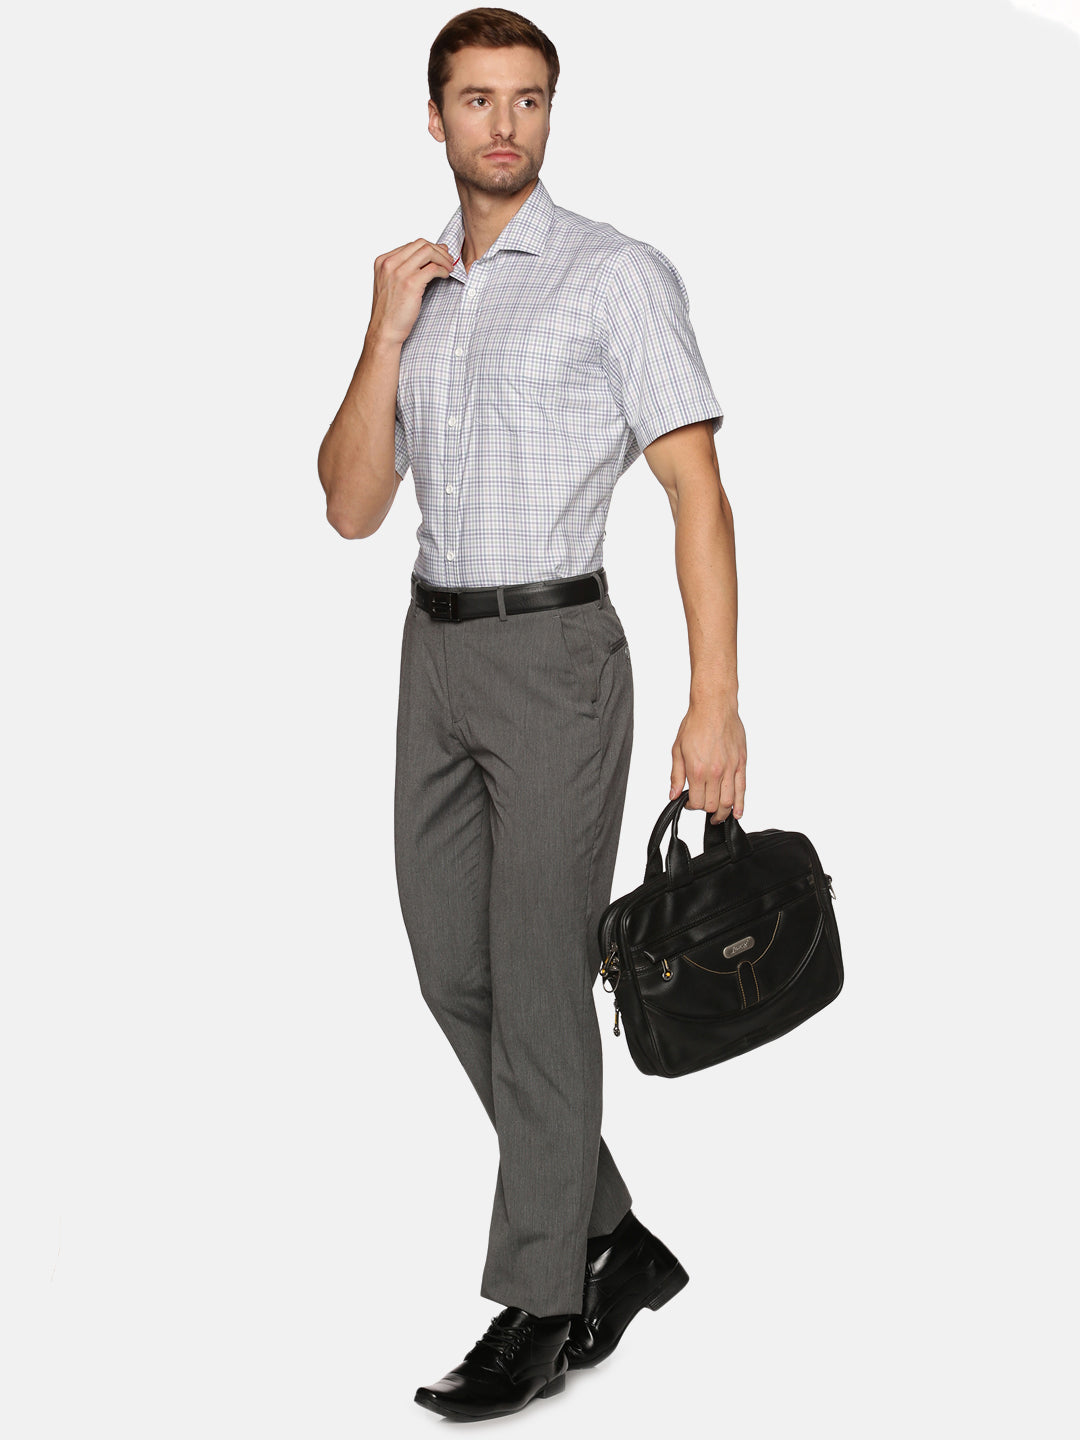 Men White Checkered Regular Fit Half Sleeve Cotton Formal Shirt